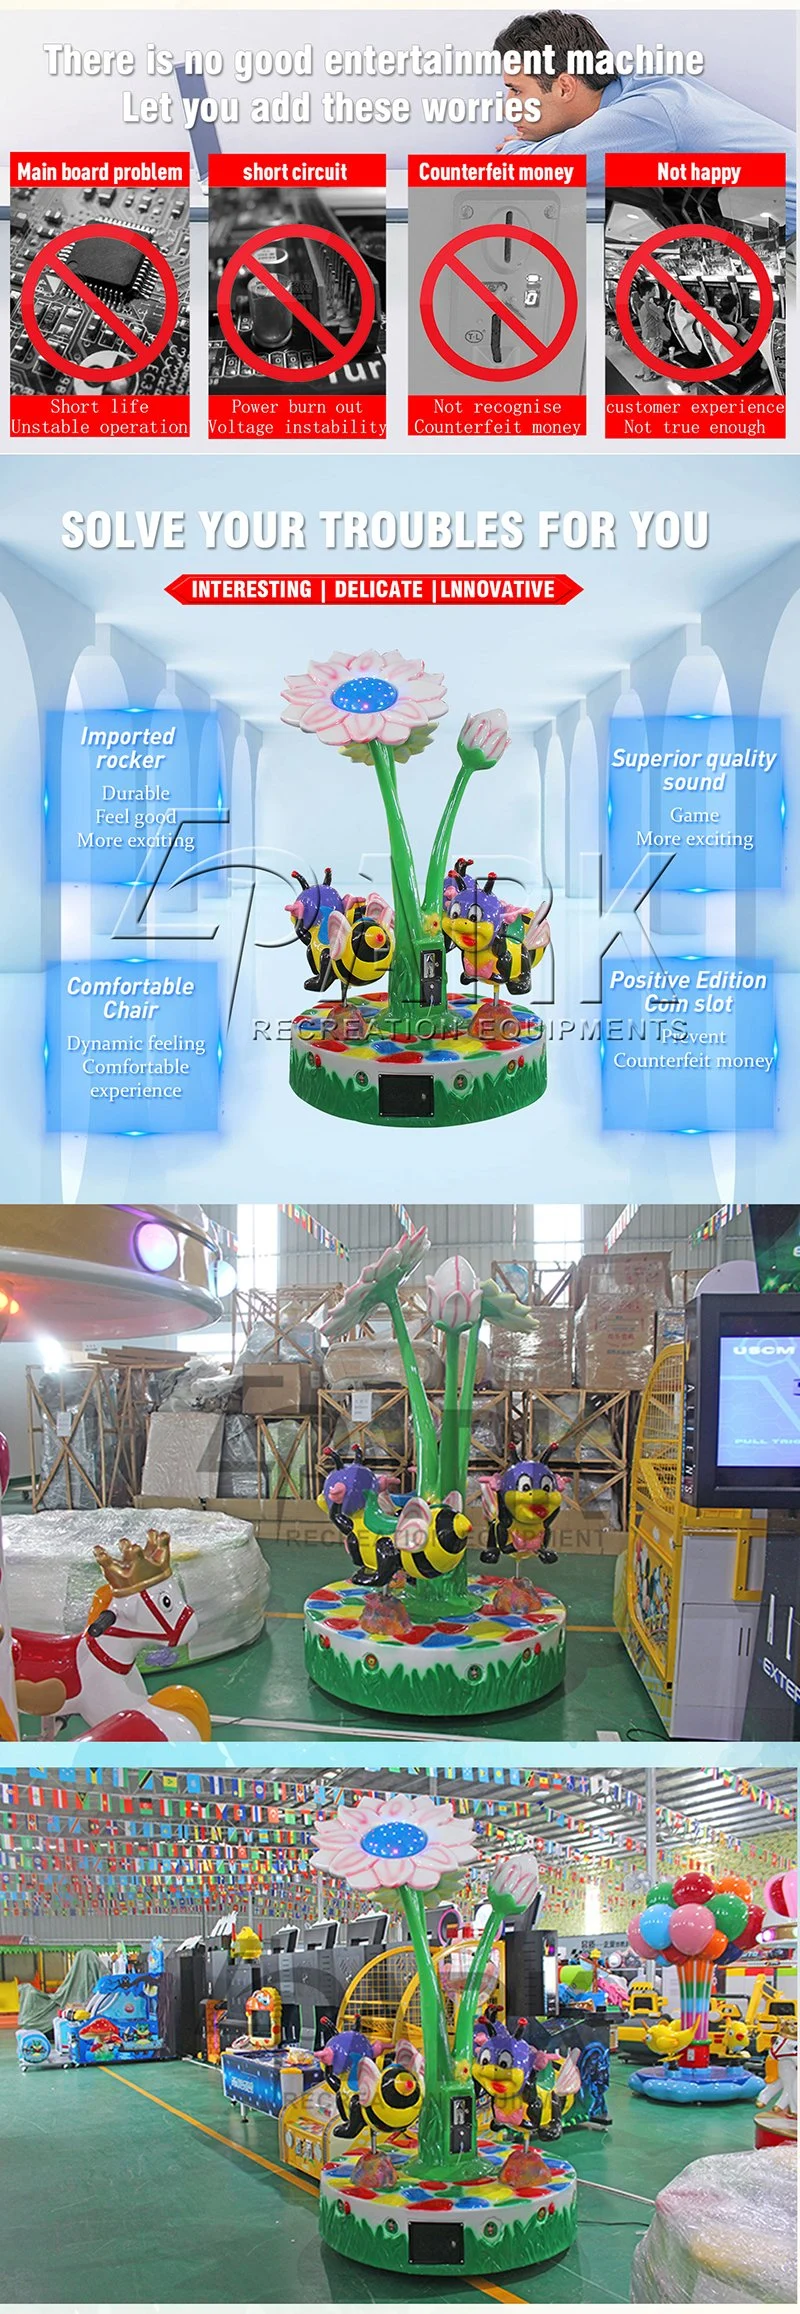 Amusement Park Flowers Carousel 3 Seats for Kids Ride Game Machine